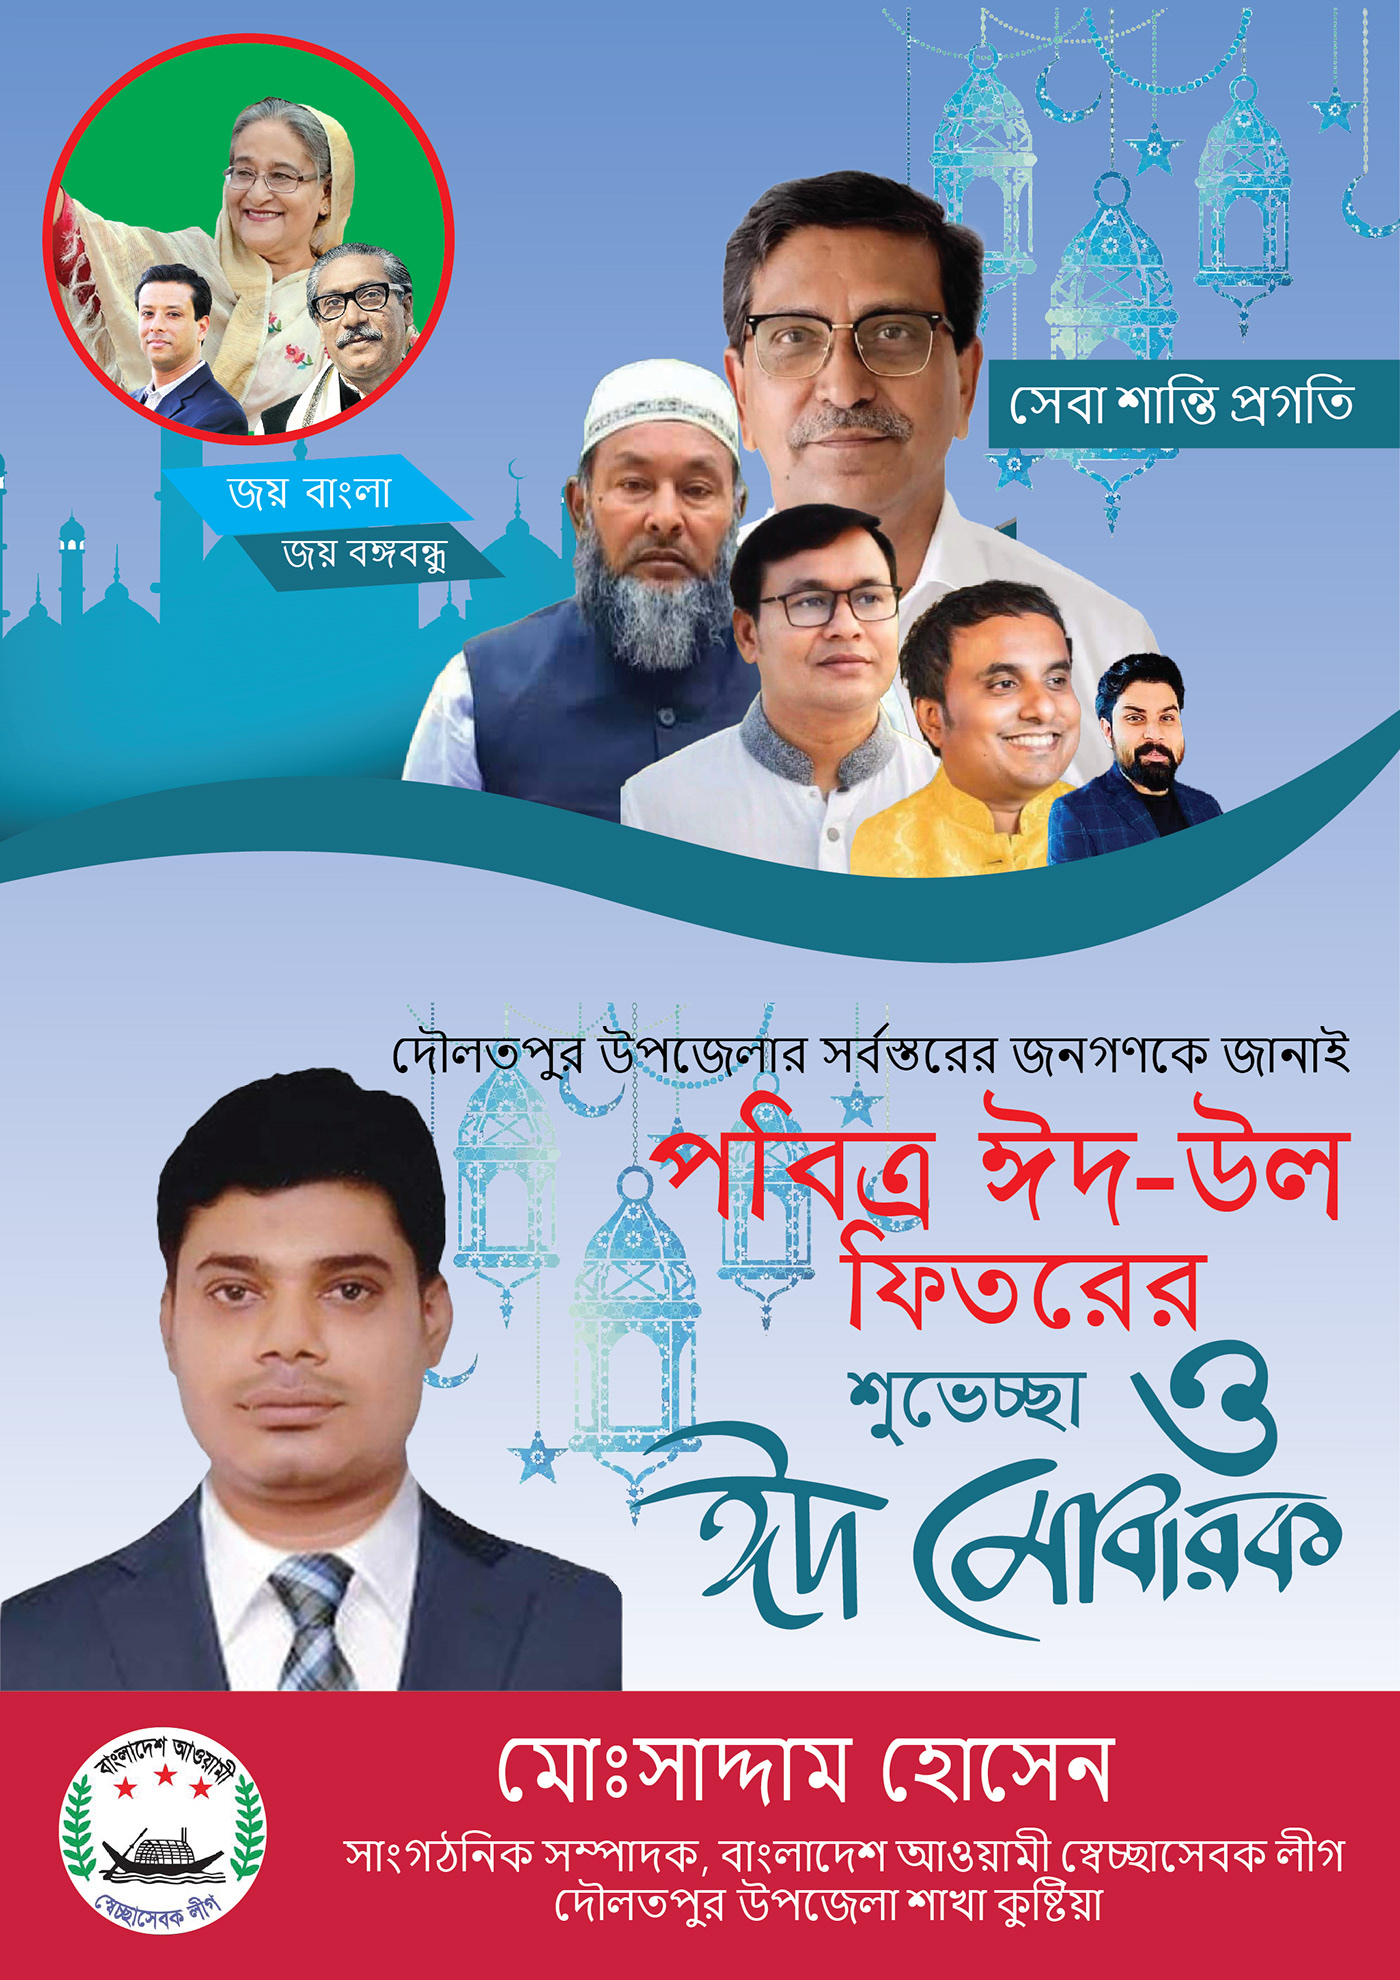 bangla poster Bangla Poster Design Eid Poster bangla eid poster bangla political design